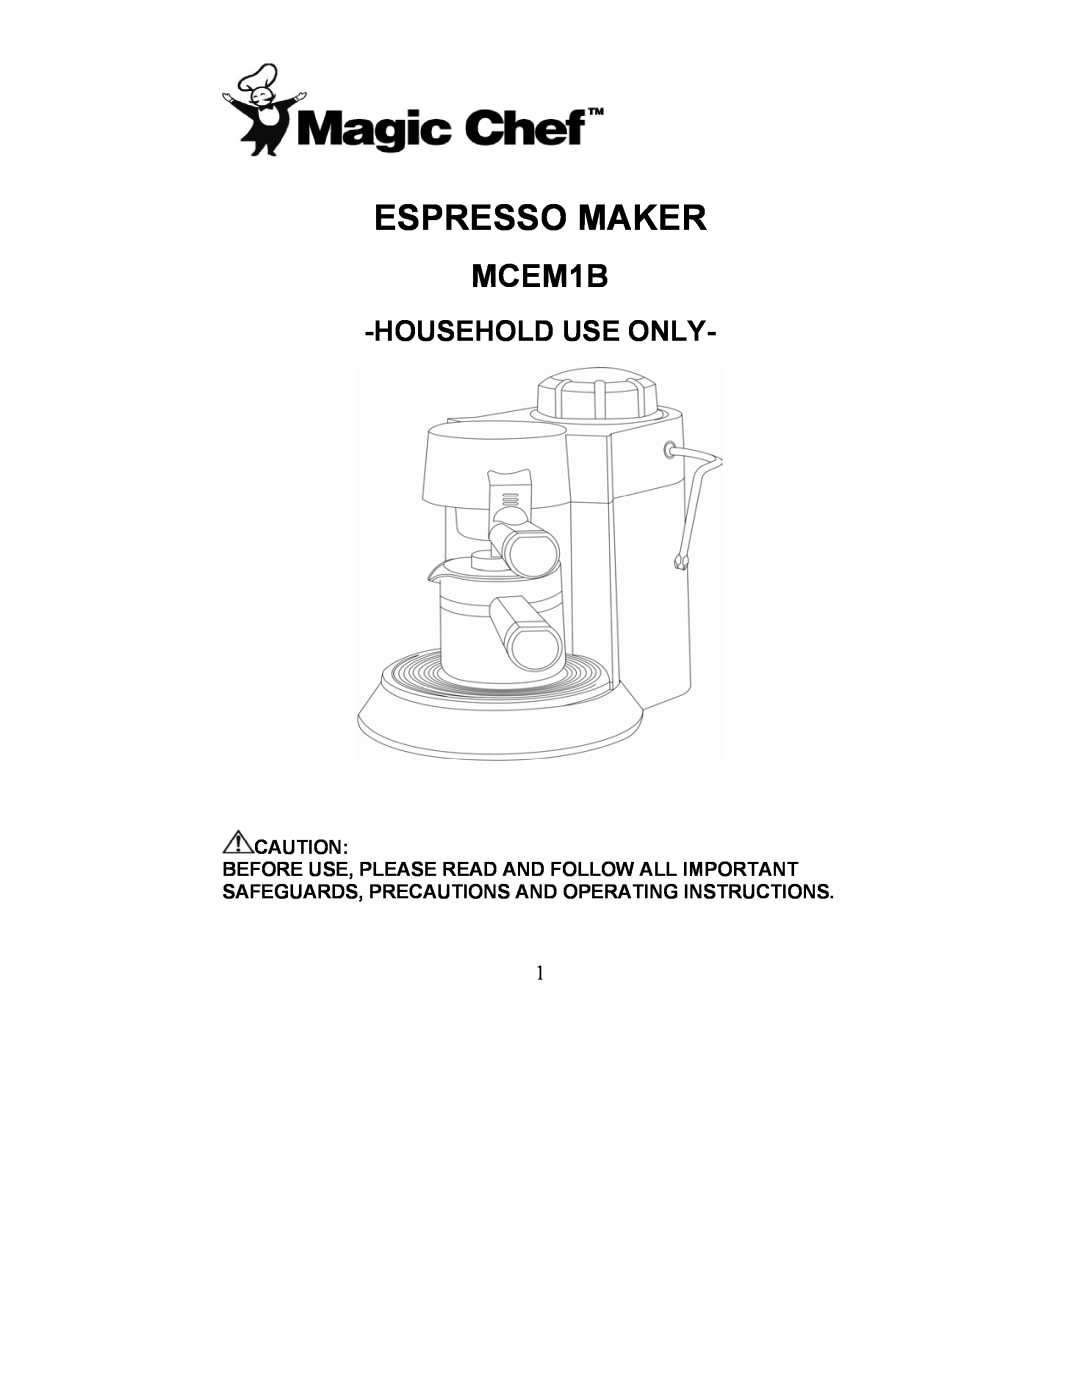 Maytag MCEM1B manual Espresso Maker, Householduse Only 